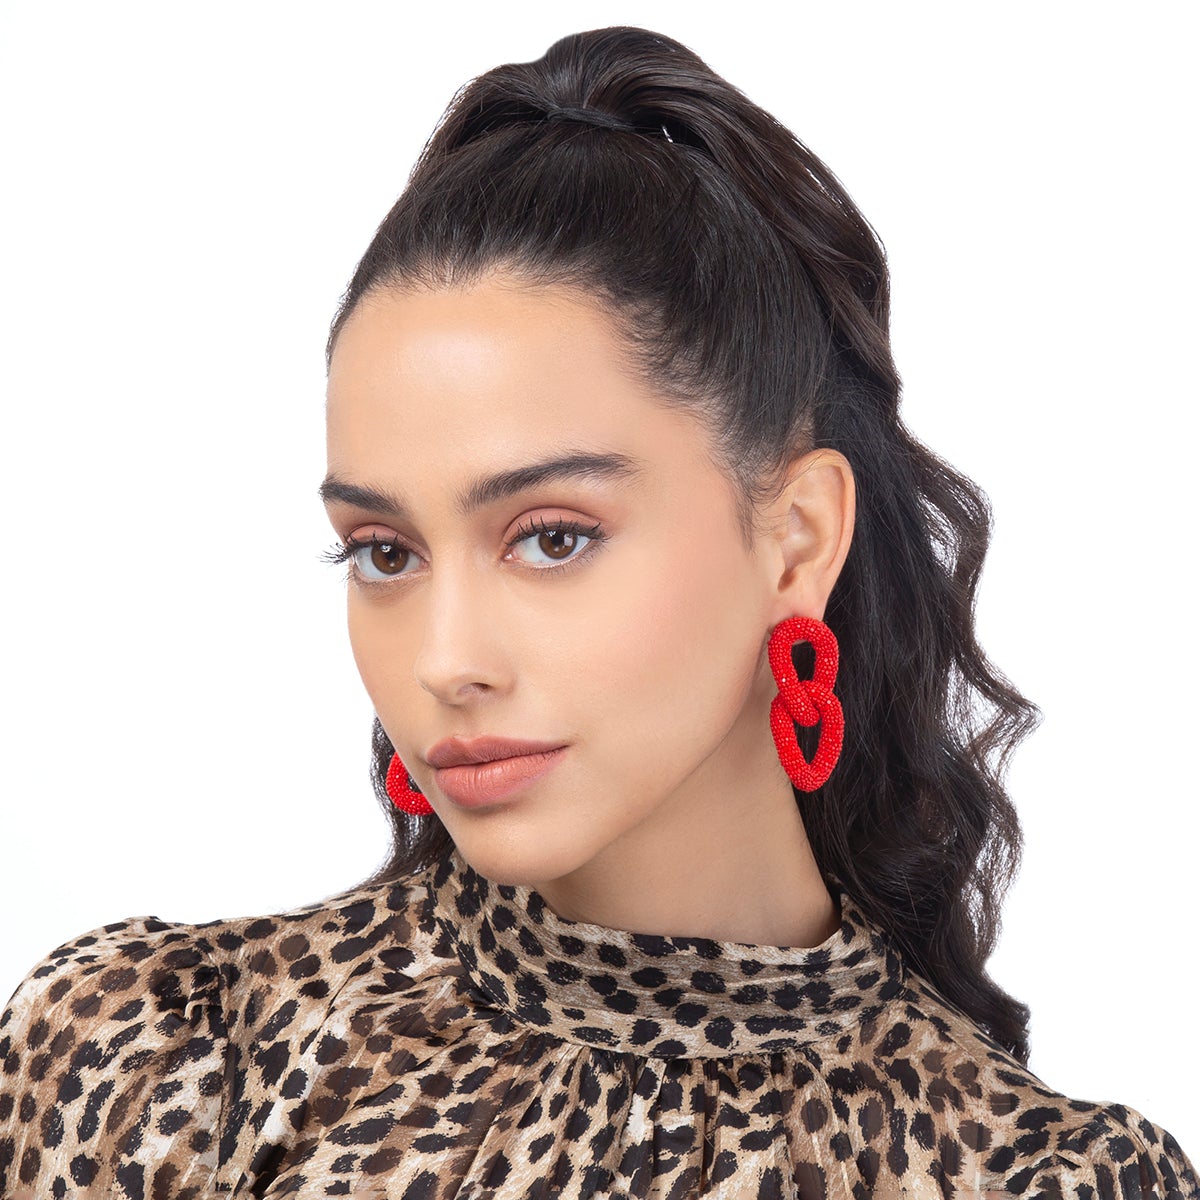 Model wearing two link beaded post earrings in red color